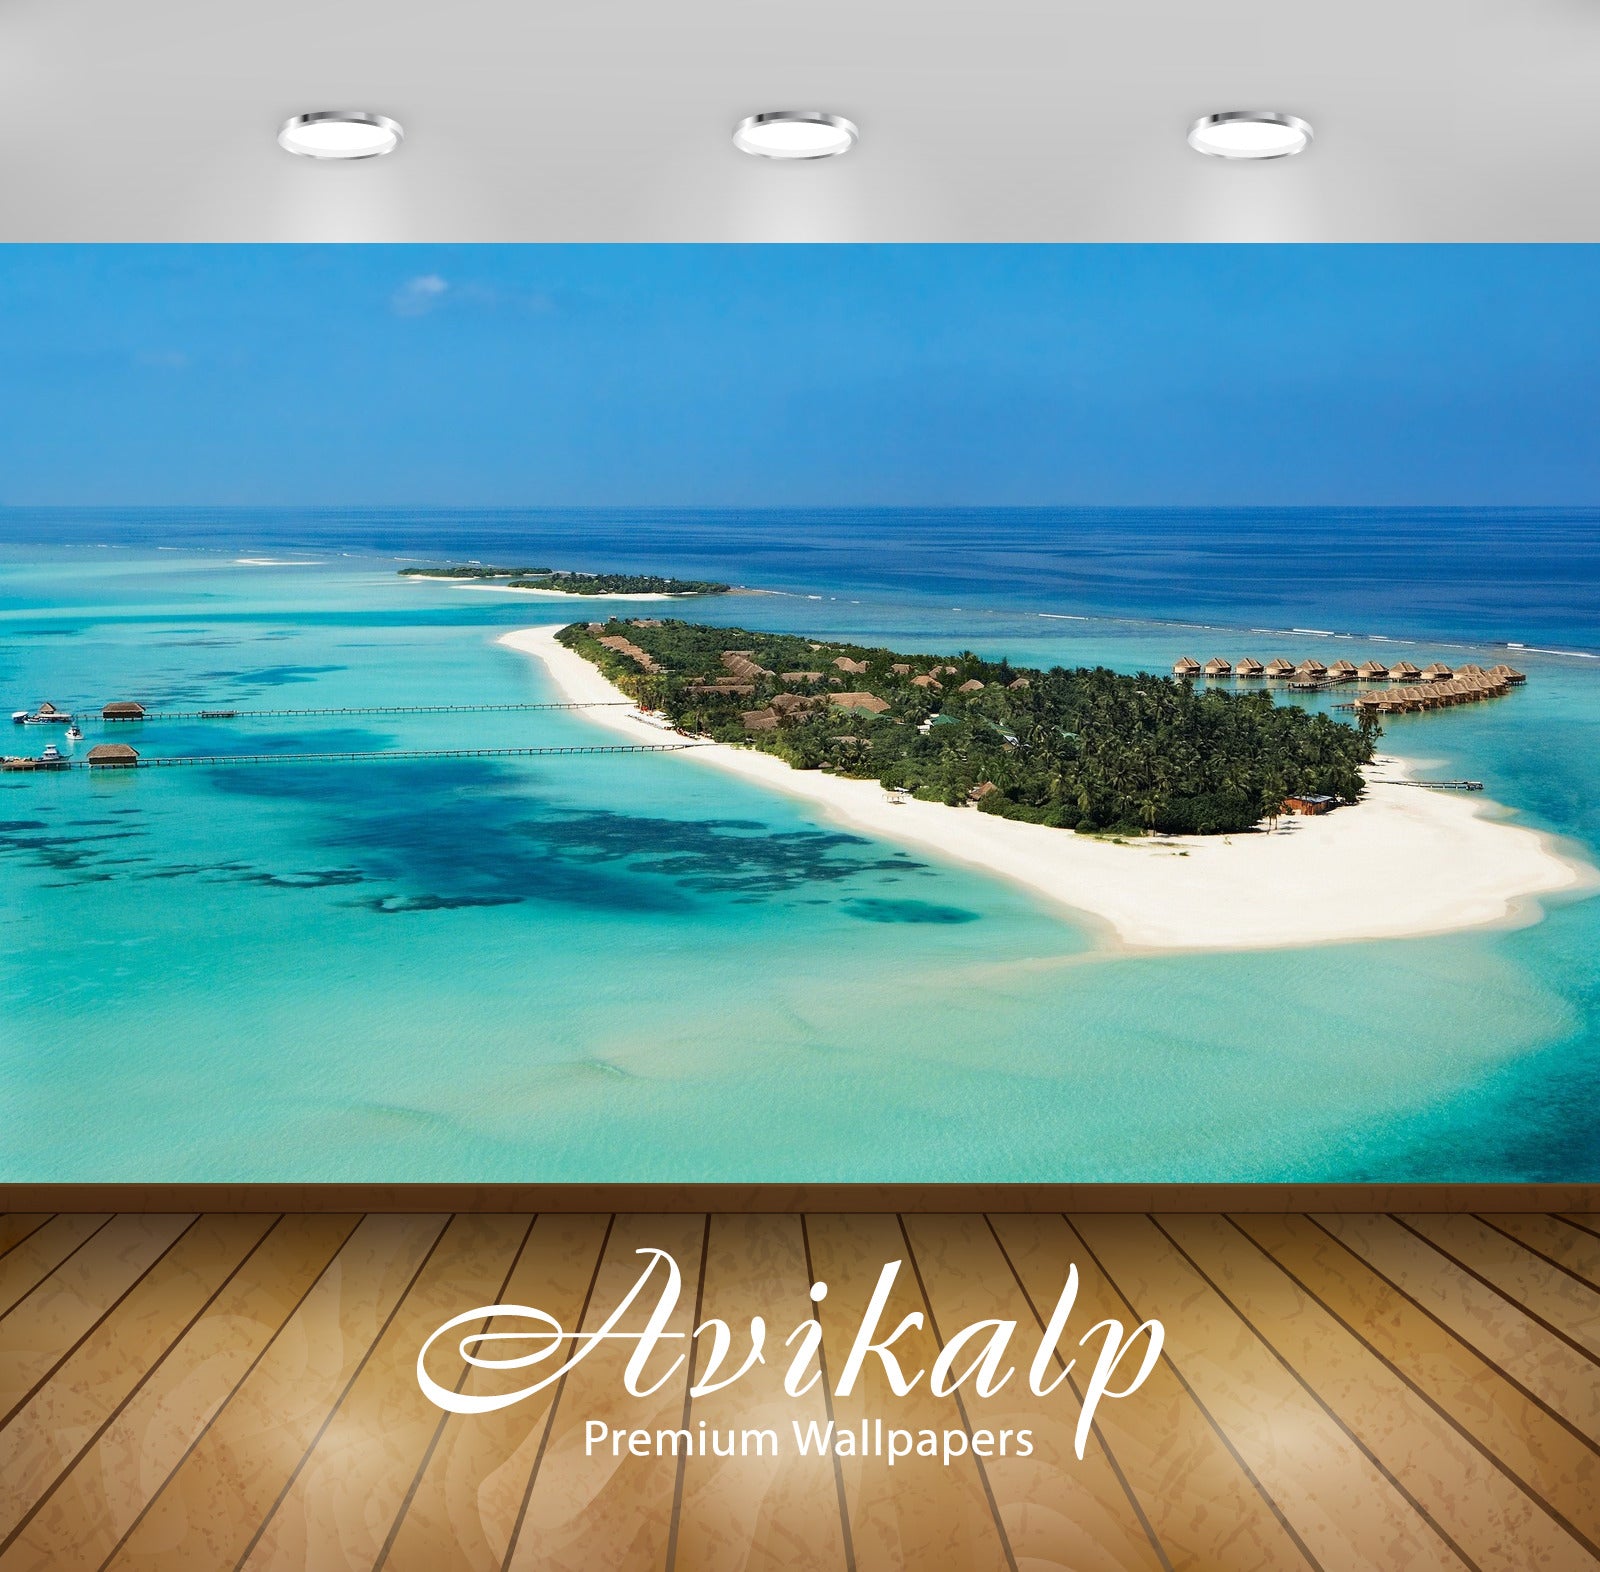 Avikalp Exclusive Awi1687 Island Kanuhura Maldives Full HD Wallpapers for Living room, Hall, Kids Ro